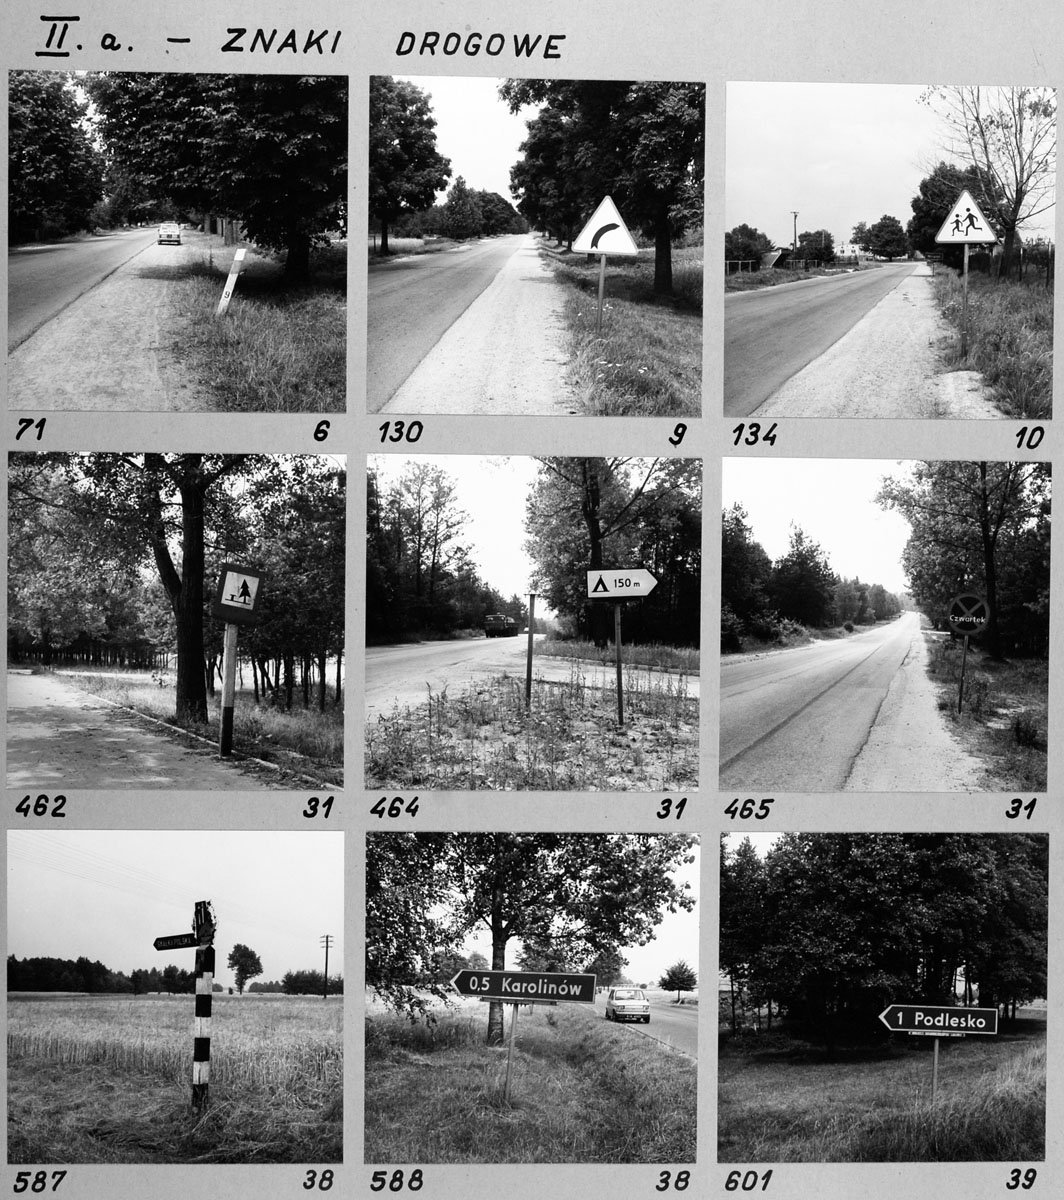 II a. – Road signs